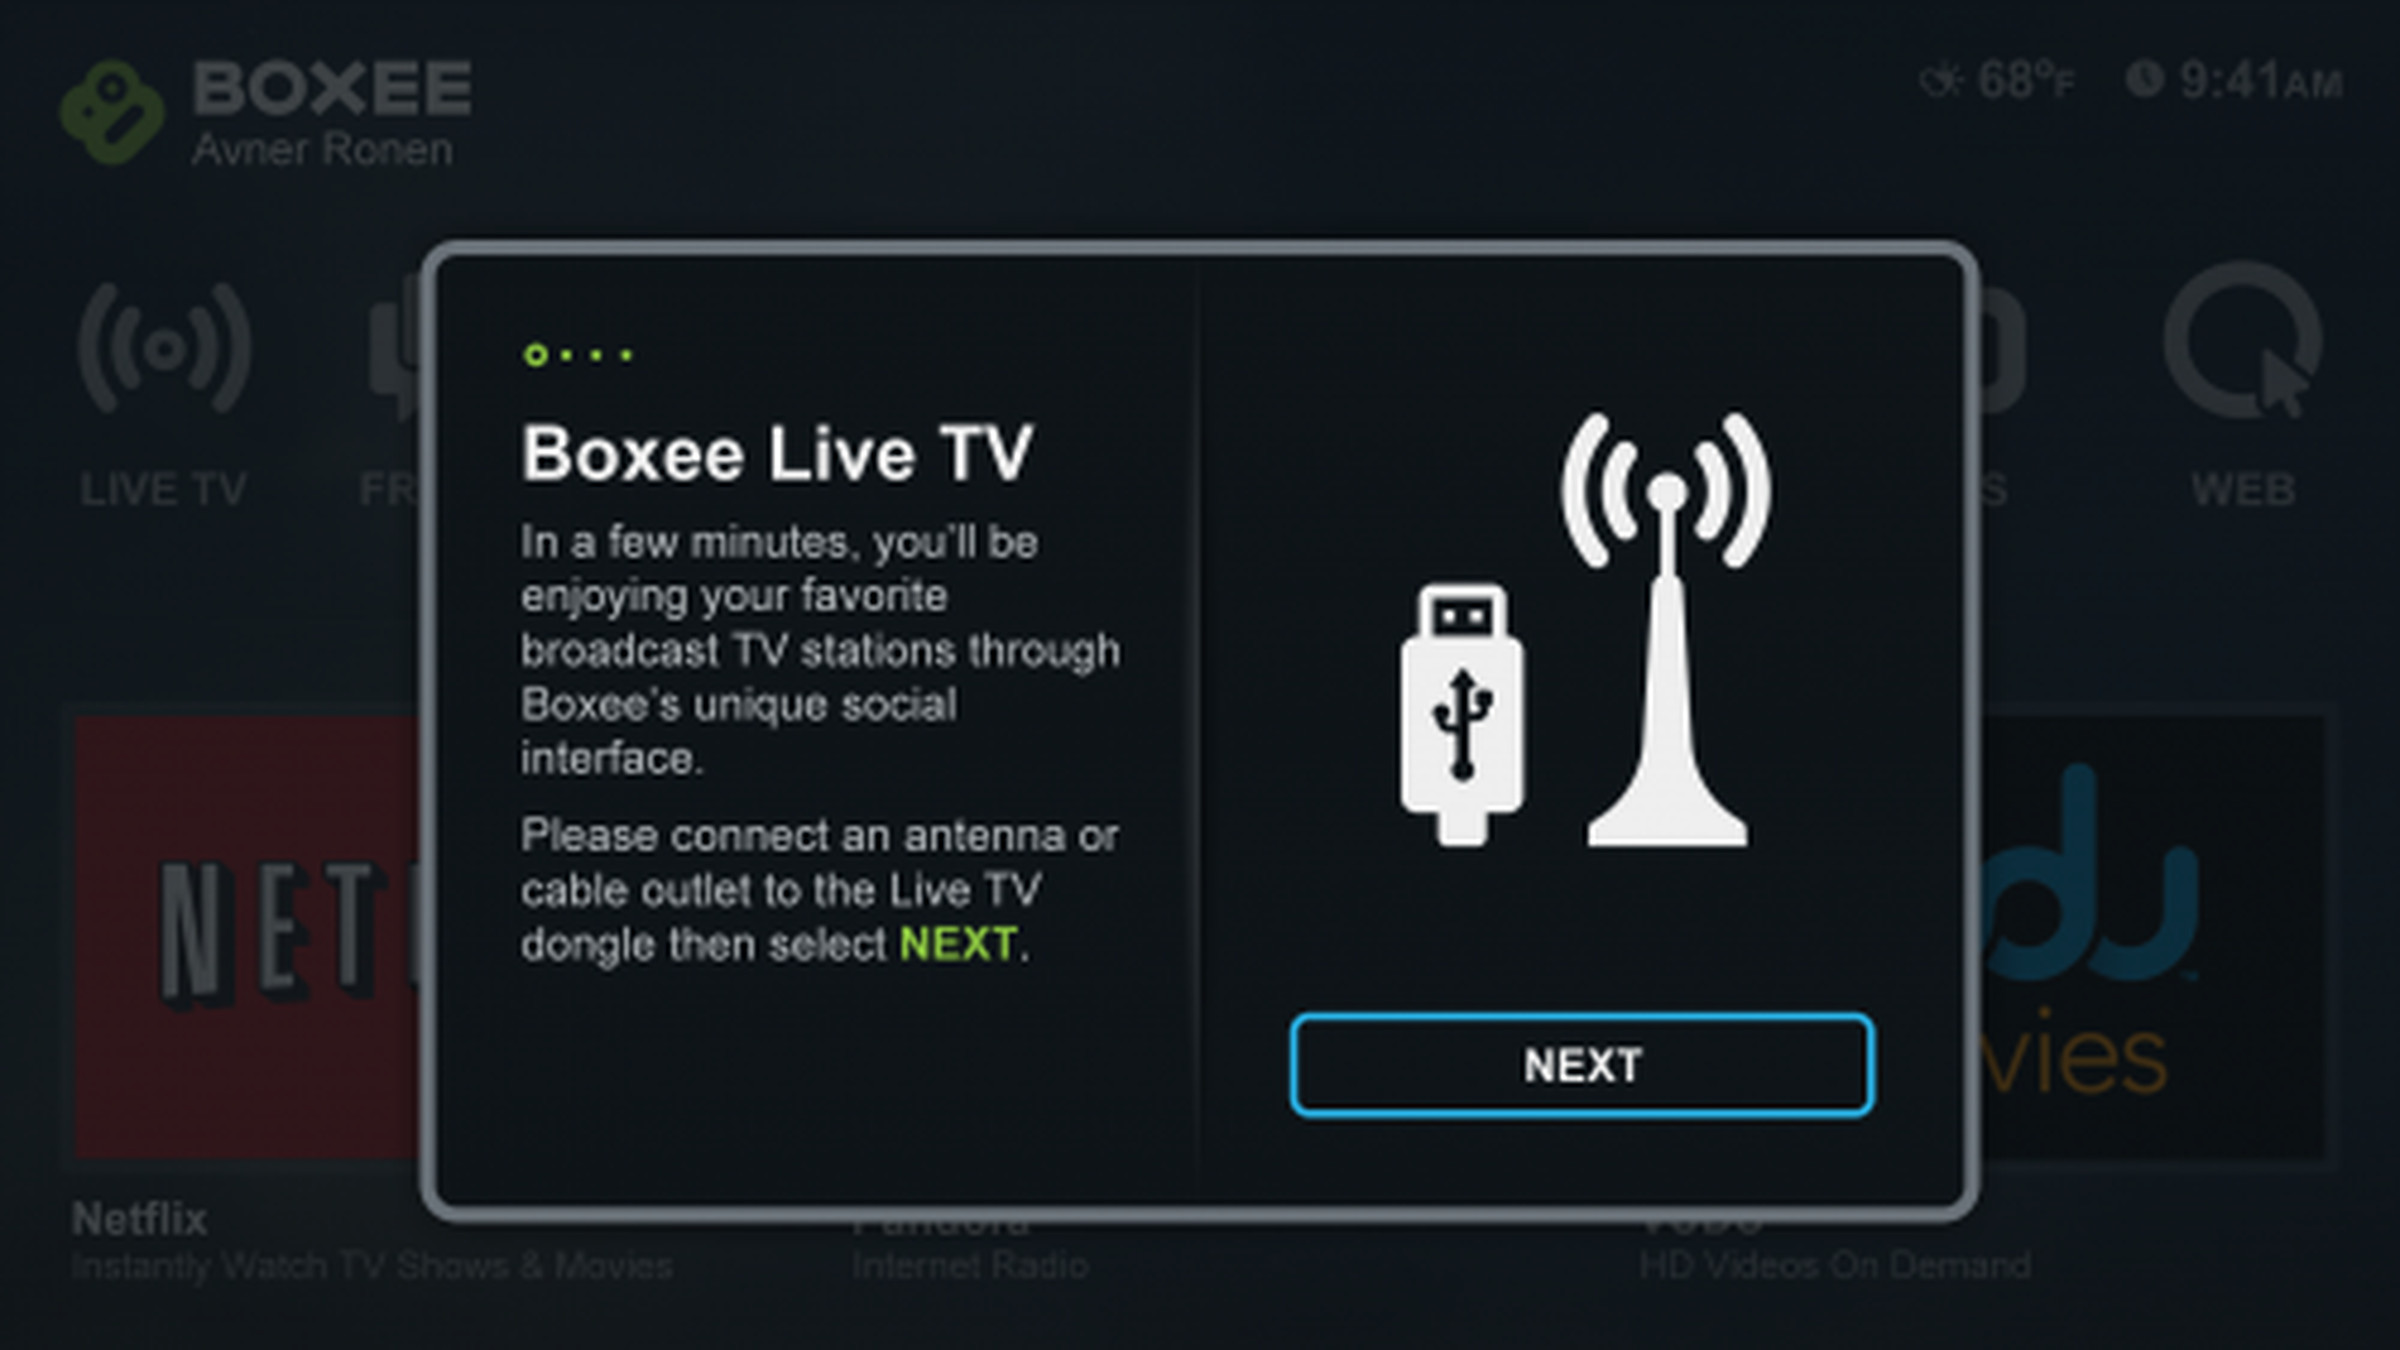 Boxee Box Live TV interface